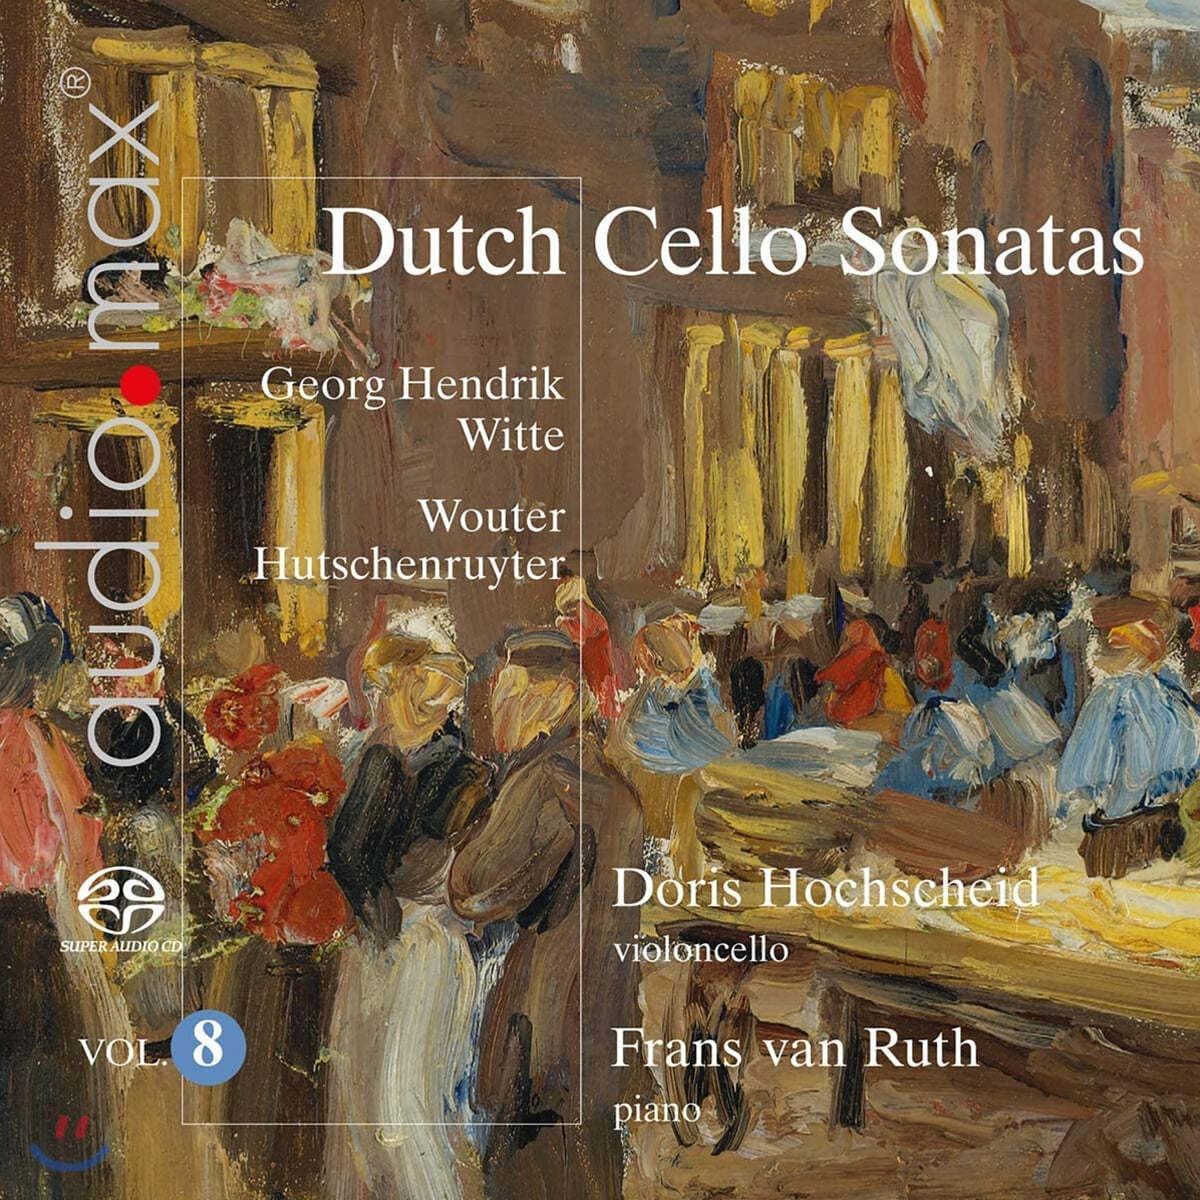 Doris Hochscheid 네덜란드 첼로 소나타 8집 - 비테 / 휘트쉔루터 (Dutch Cello Sonatas Vol.8 - Witte / Hutschenruijter)